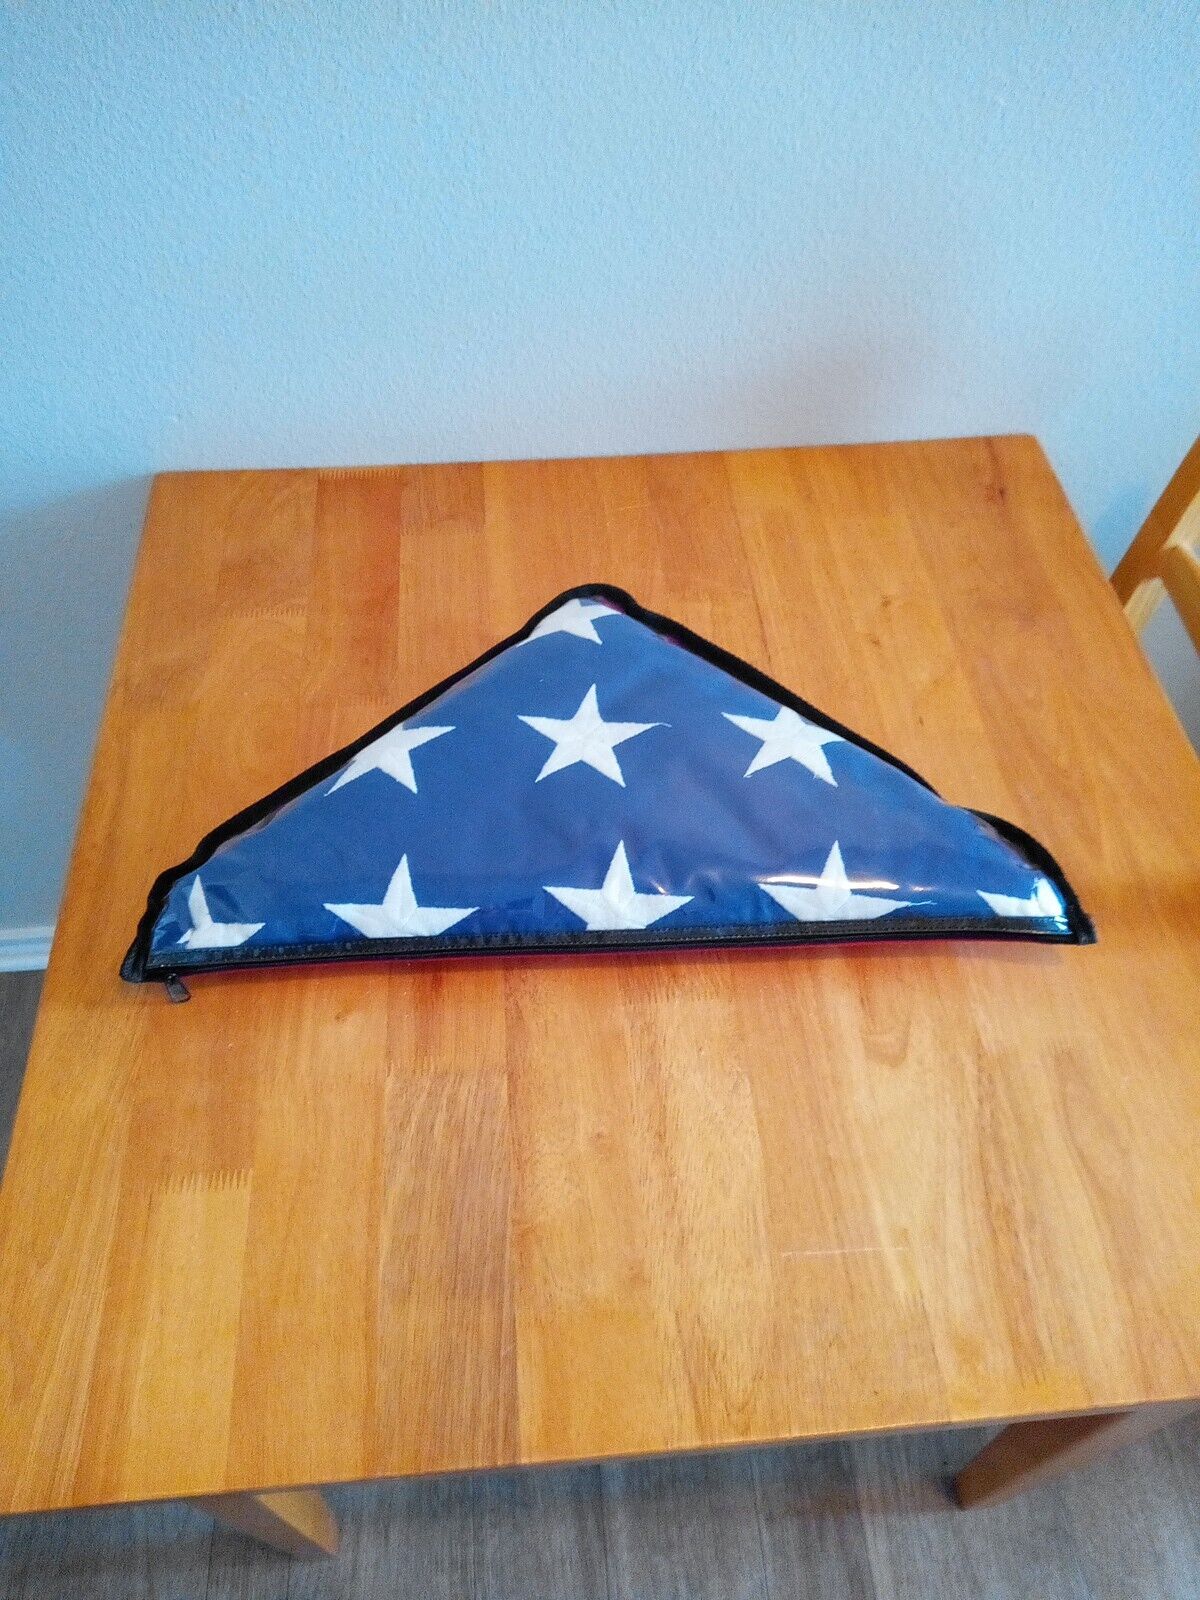 Folded Ceremonial Heavy Duty Flag From Navy Veteran In Plastic Zip Case